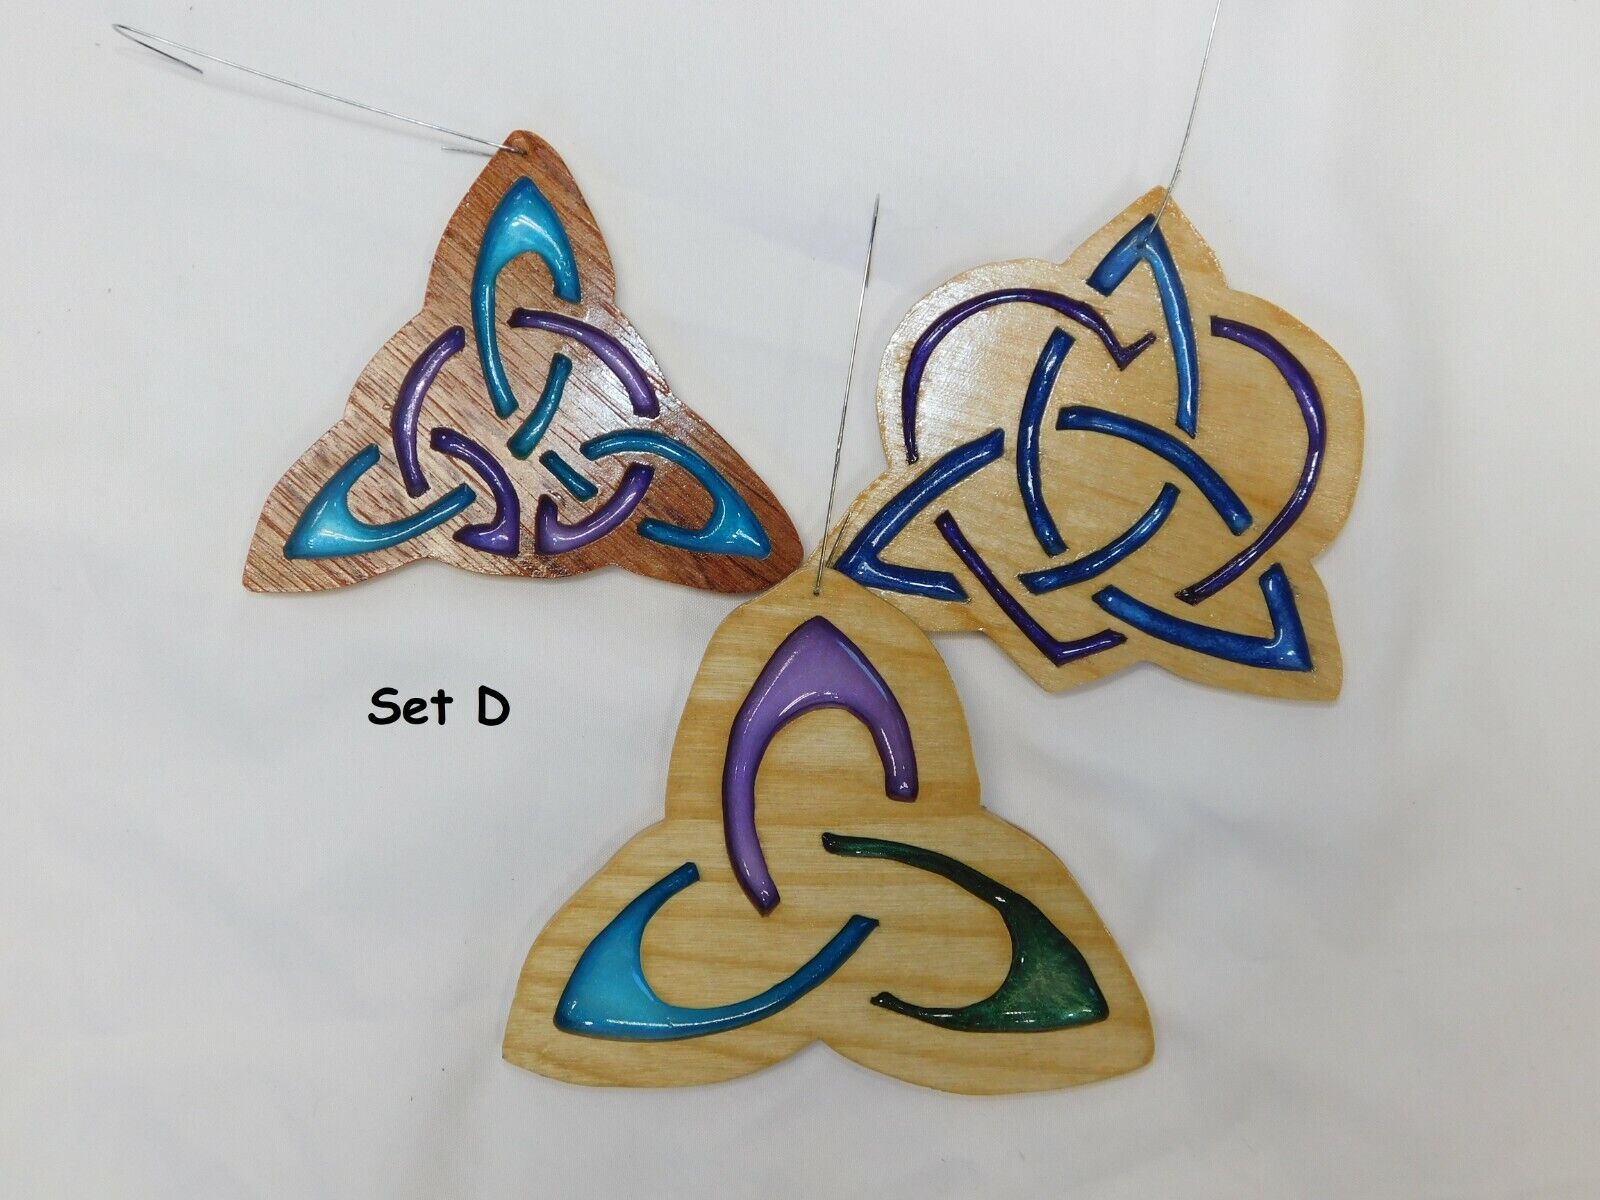 Set of 3 Celtic Knot Ornaments, Handmade Hardwood Decorations, Set D, suncatcher